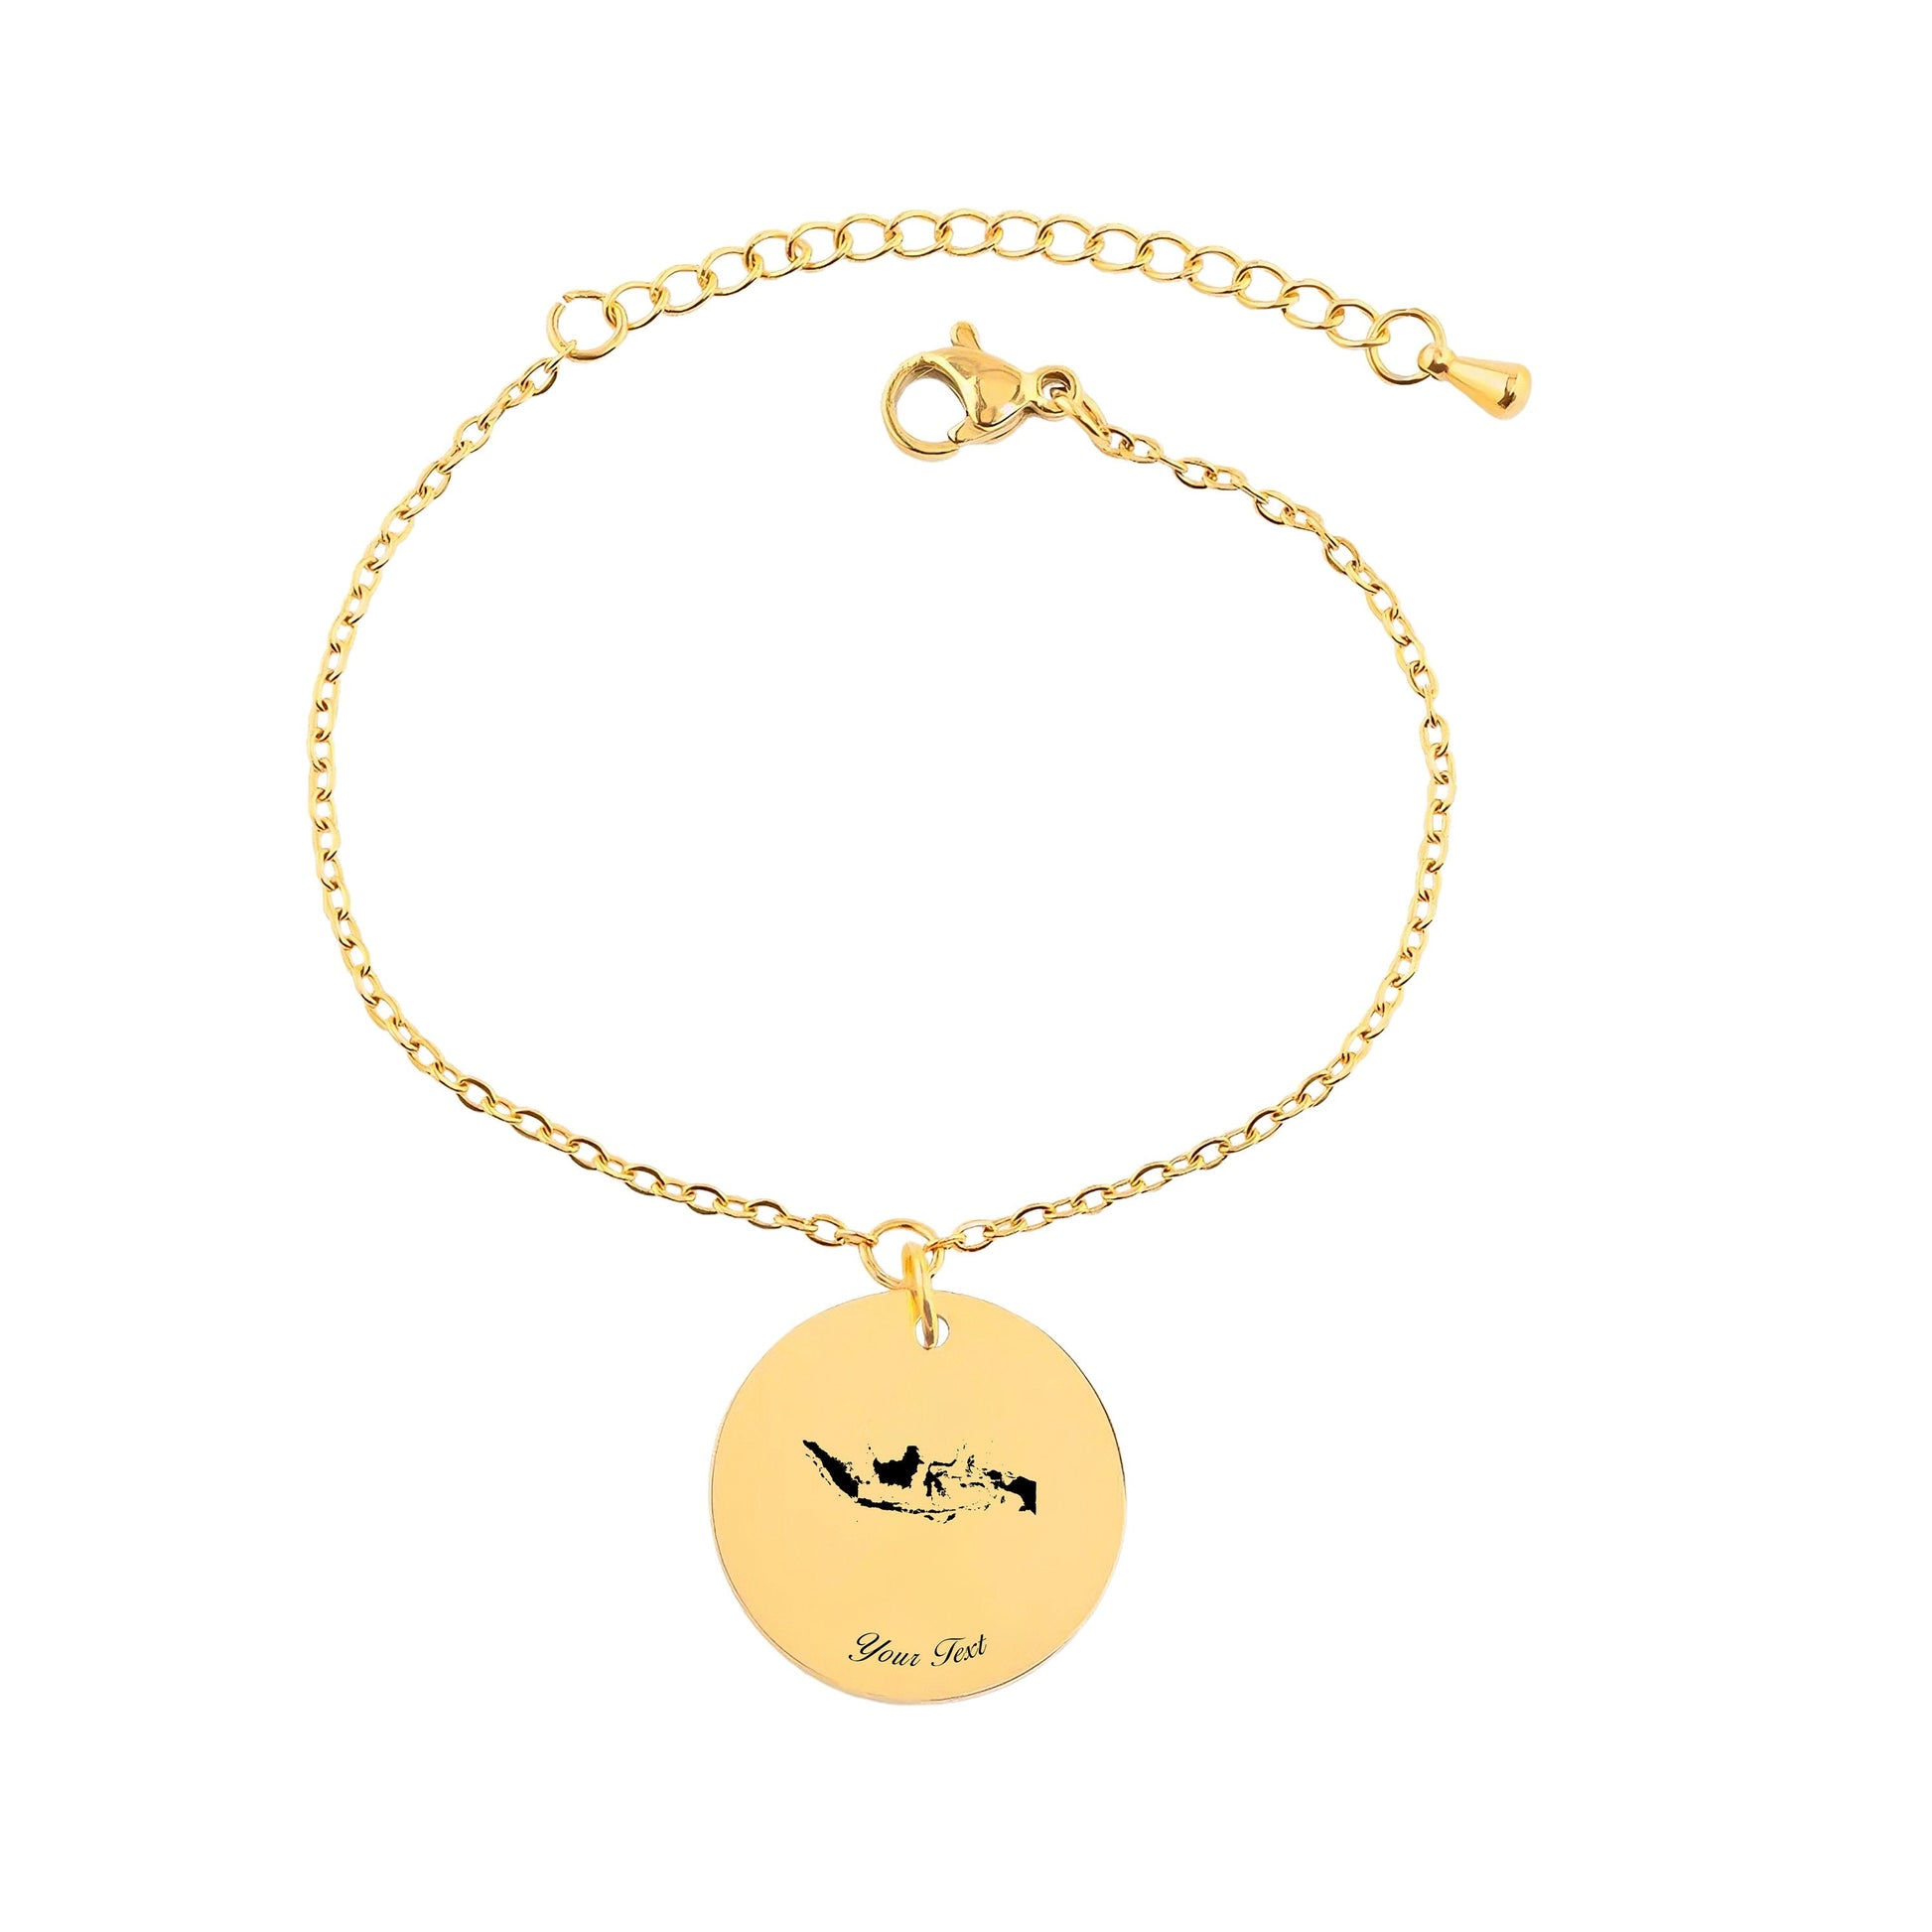 Indonesia Country Map Bracelet, Your Name Bracelet, Minimalist Bracelet, Personalized Gift, 14K Gold Bracelet, Gift For Him Her